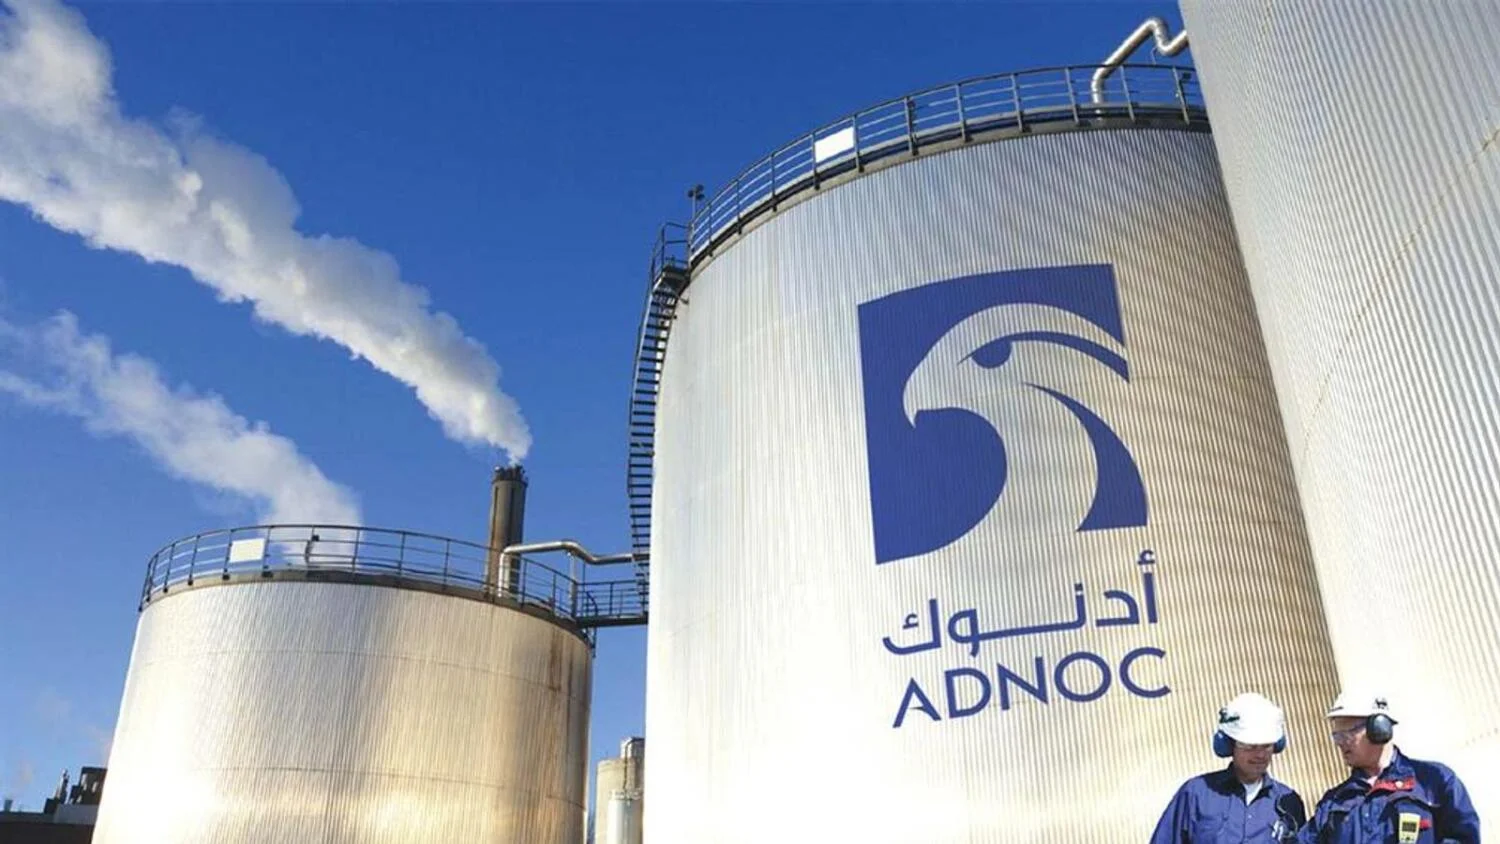 Abu Dhabi National Oil Company (ADNOC) – Main Oil Terminal (MOT)